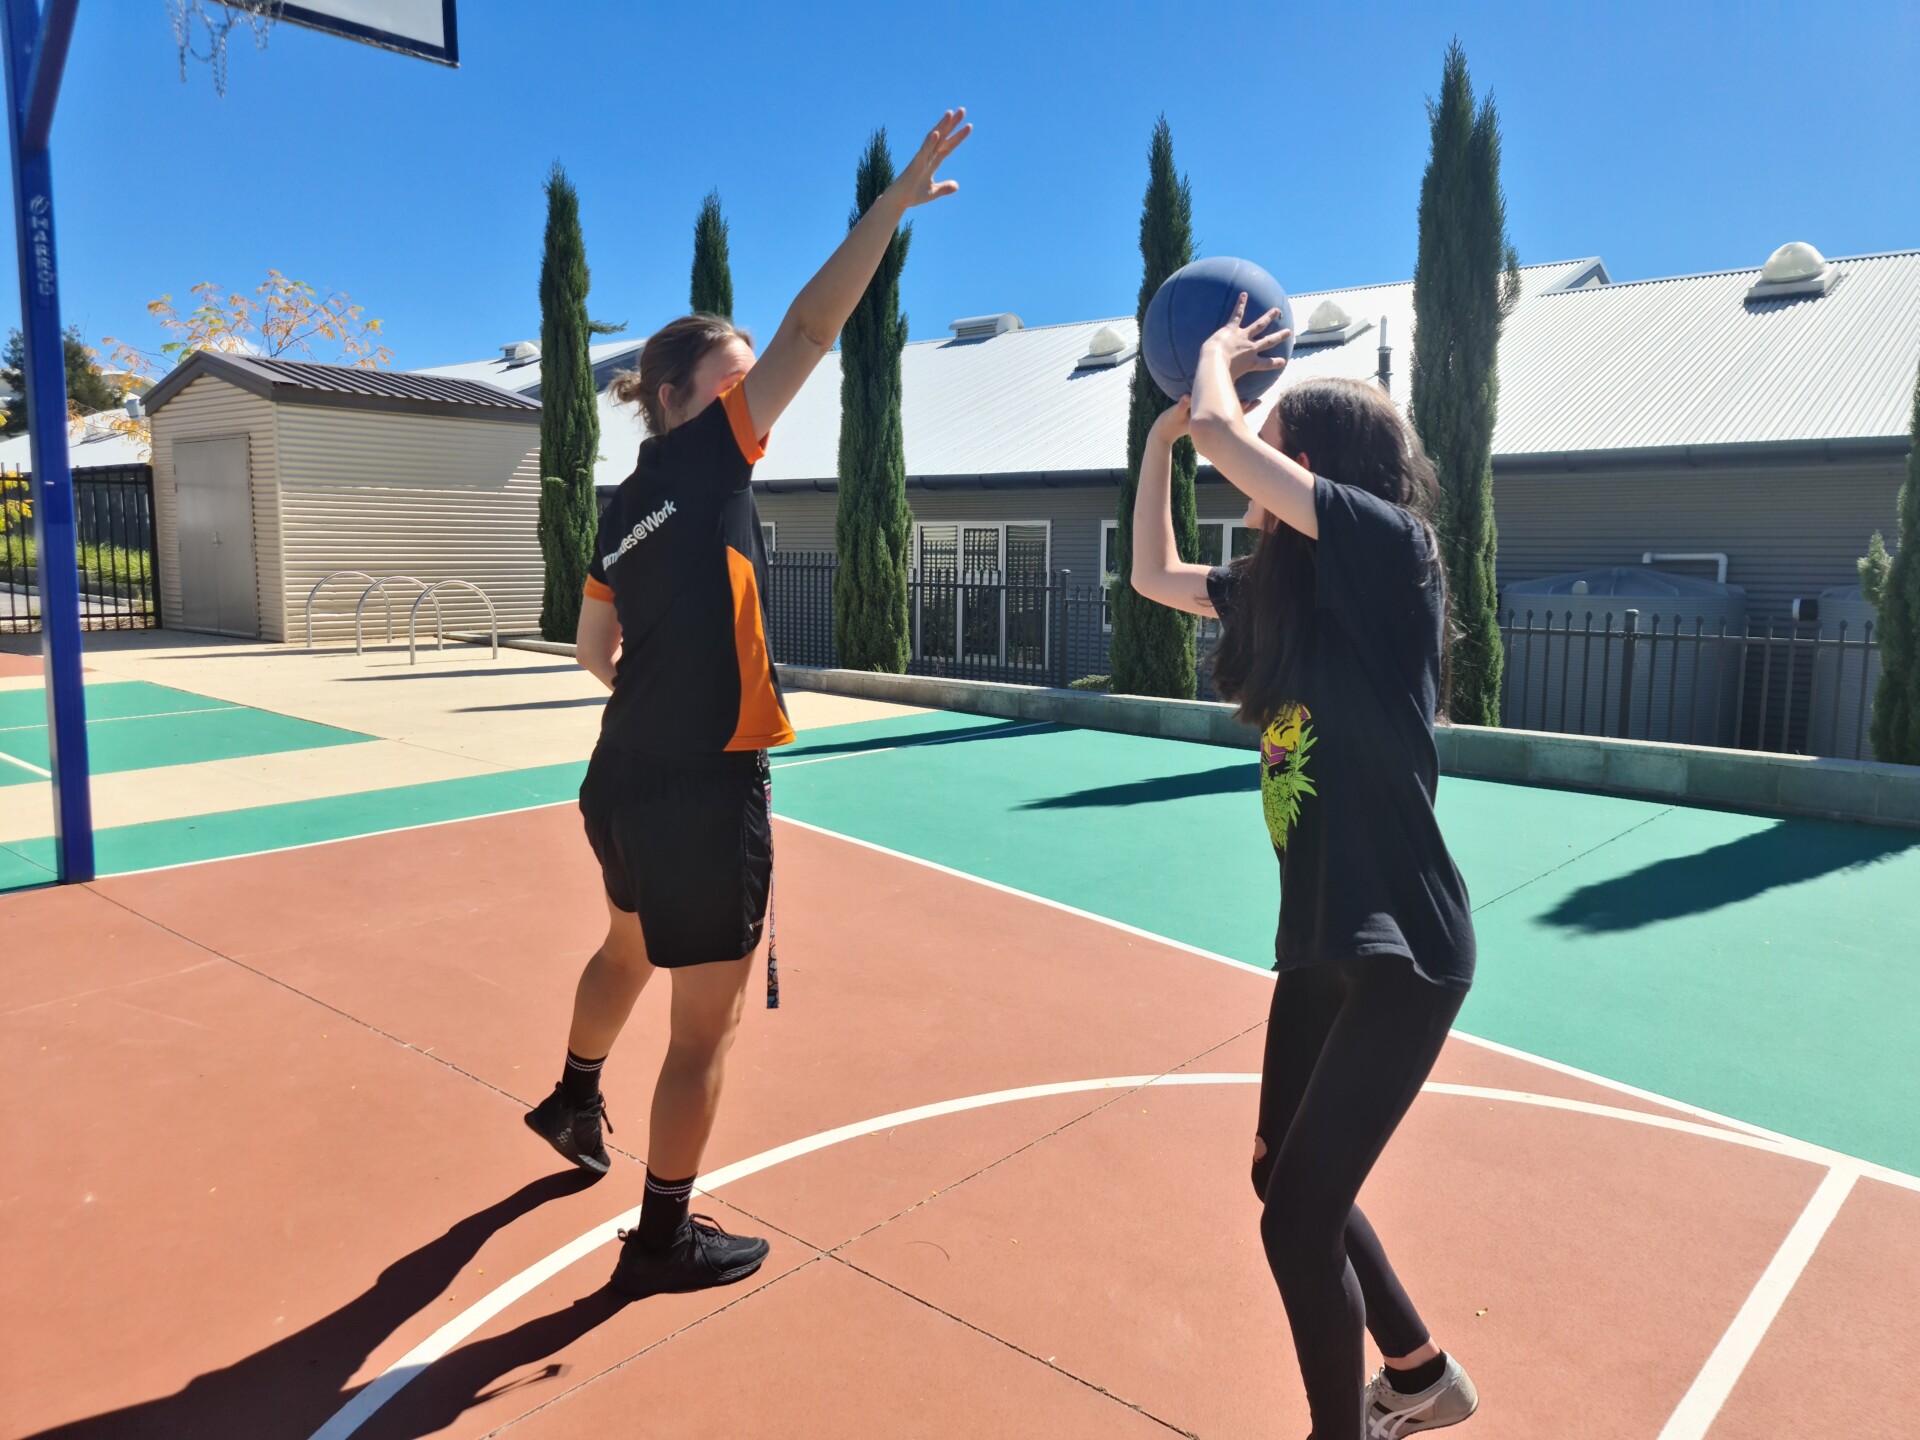 Playing basketball at Galilee School